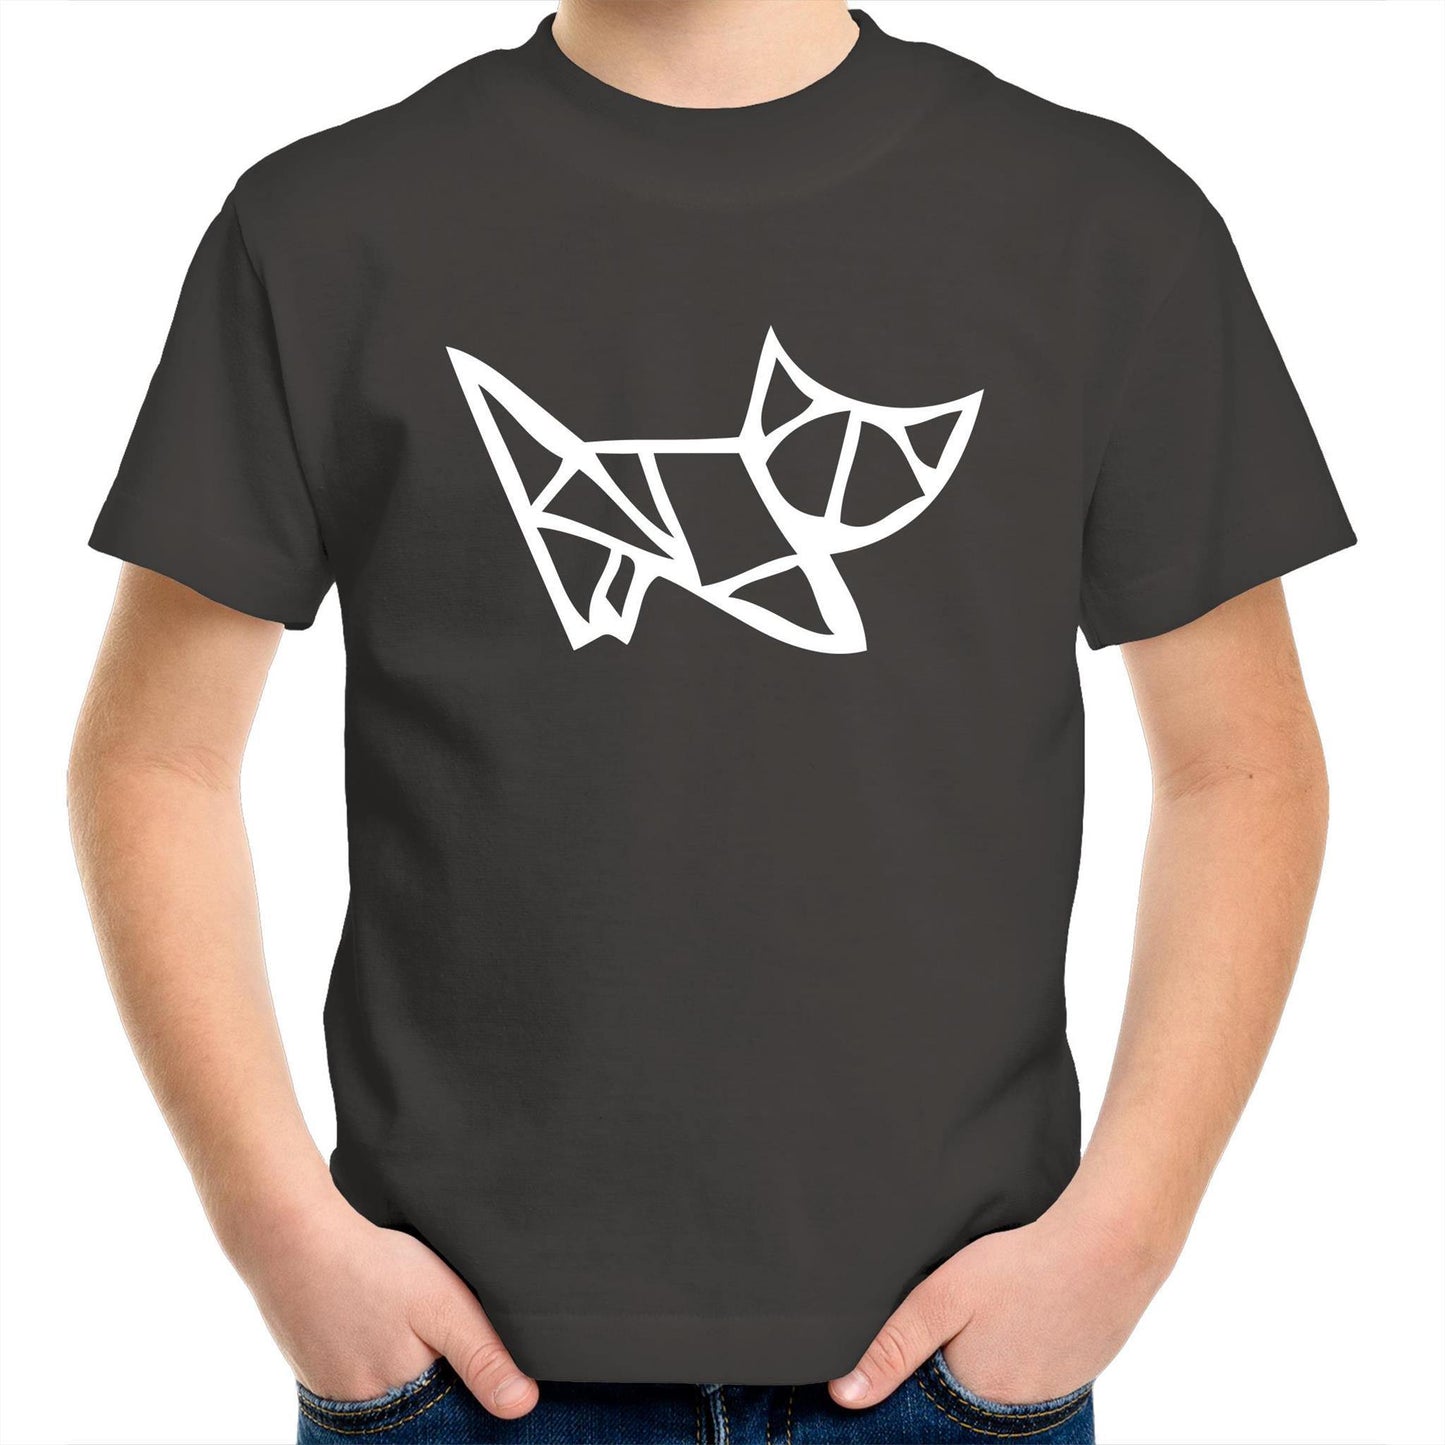 Origami Kitten - Kids Youth Crew T-Shirt Charcoal Kids Youth T-shirt animal